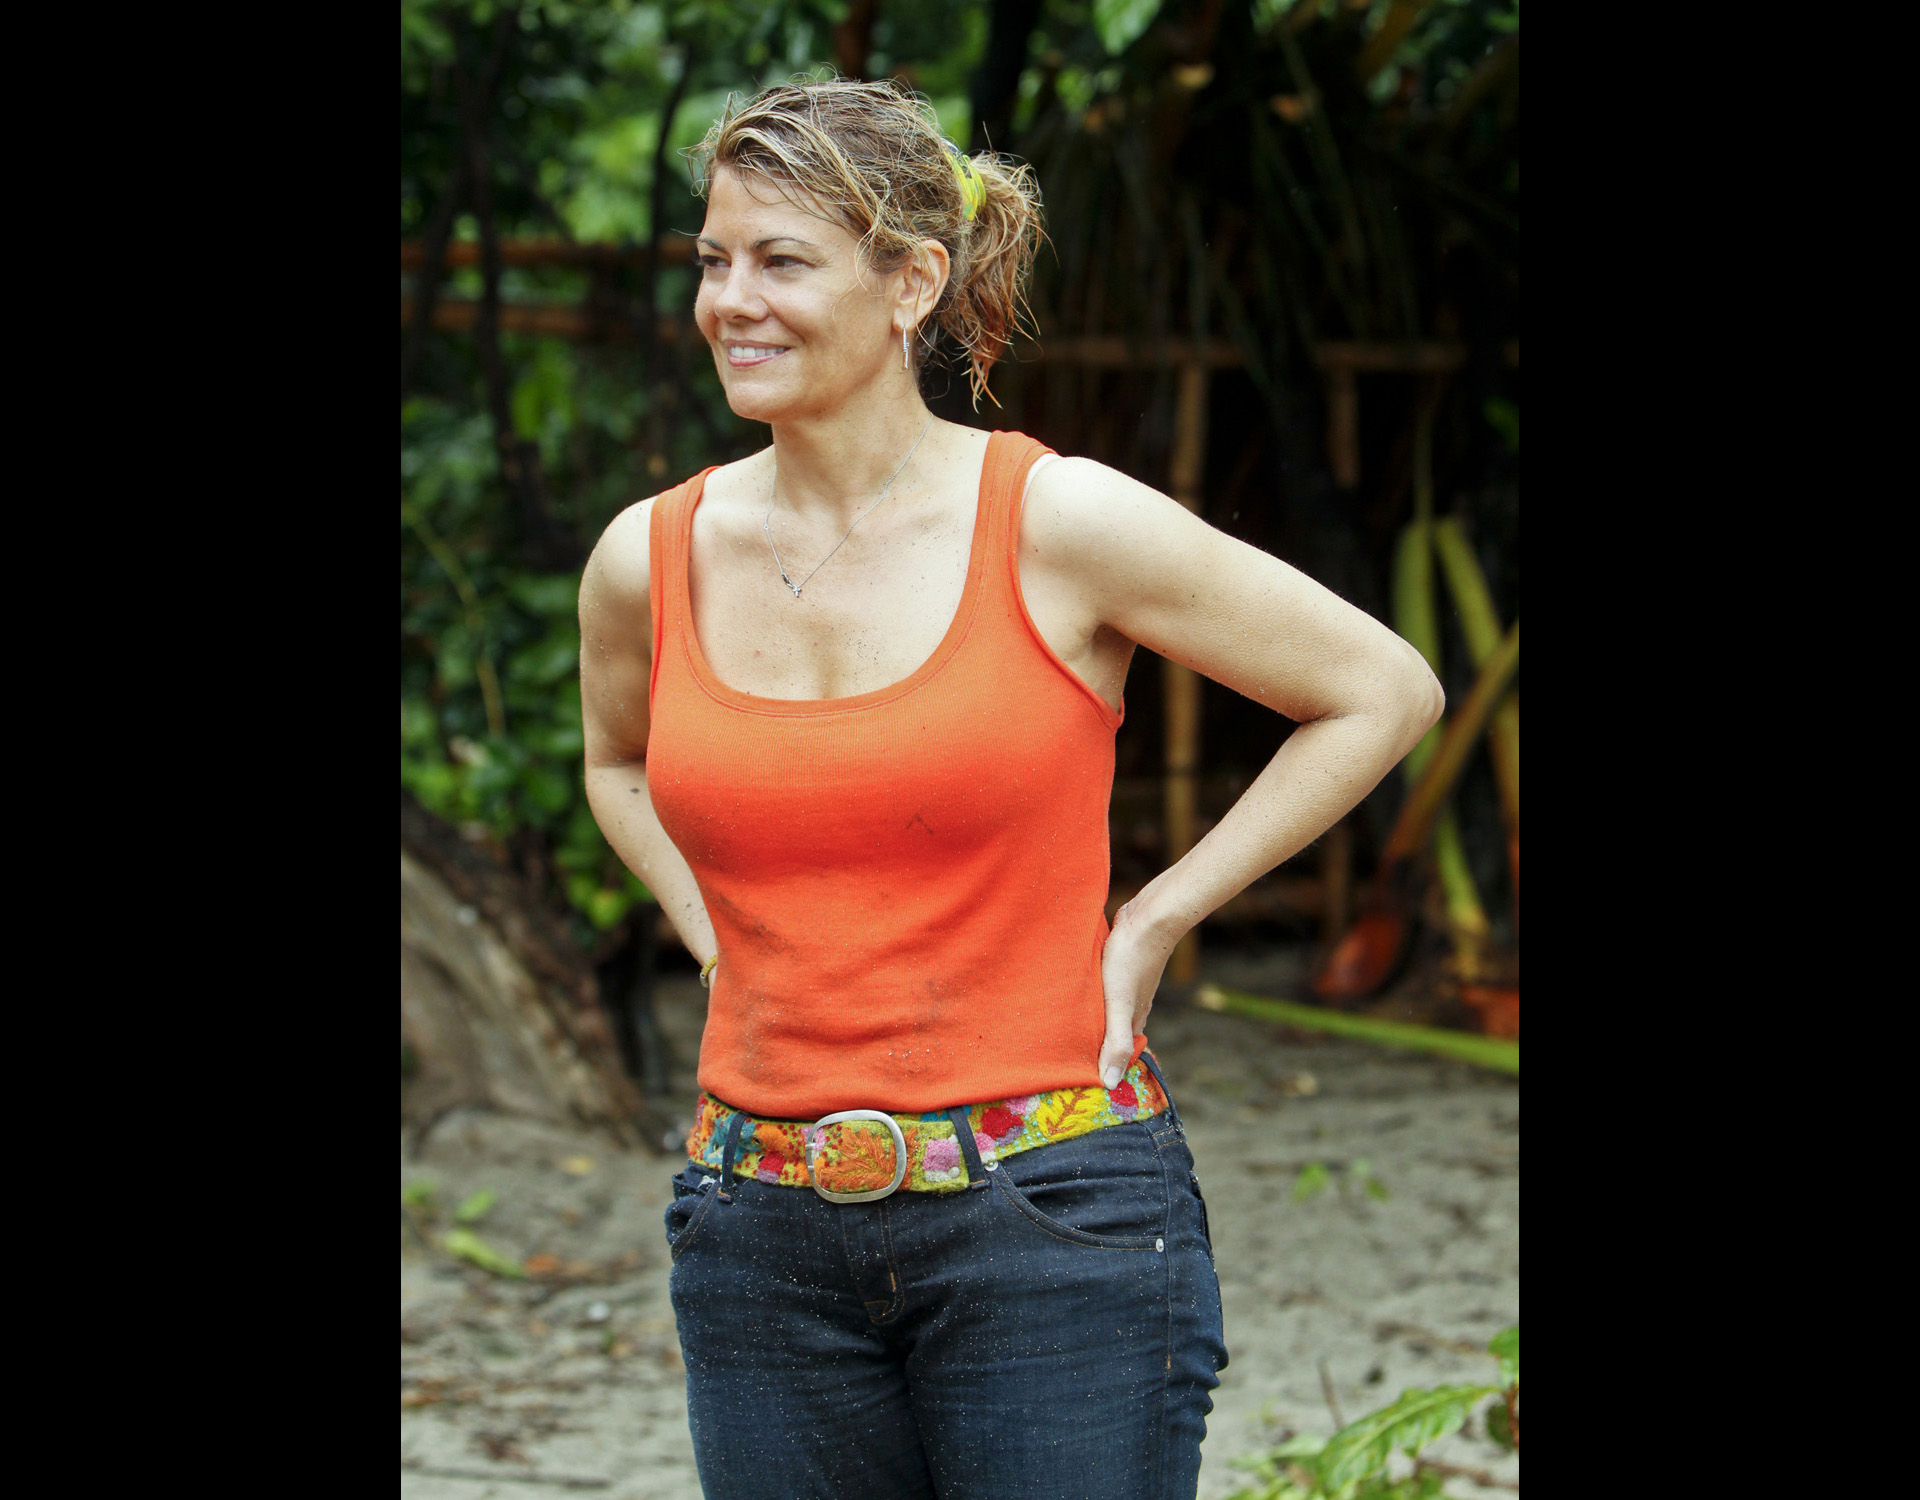 Lisa Whelchel on ‘Survivor’